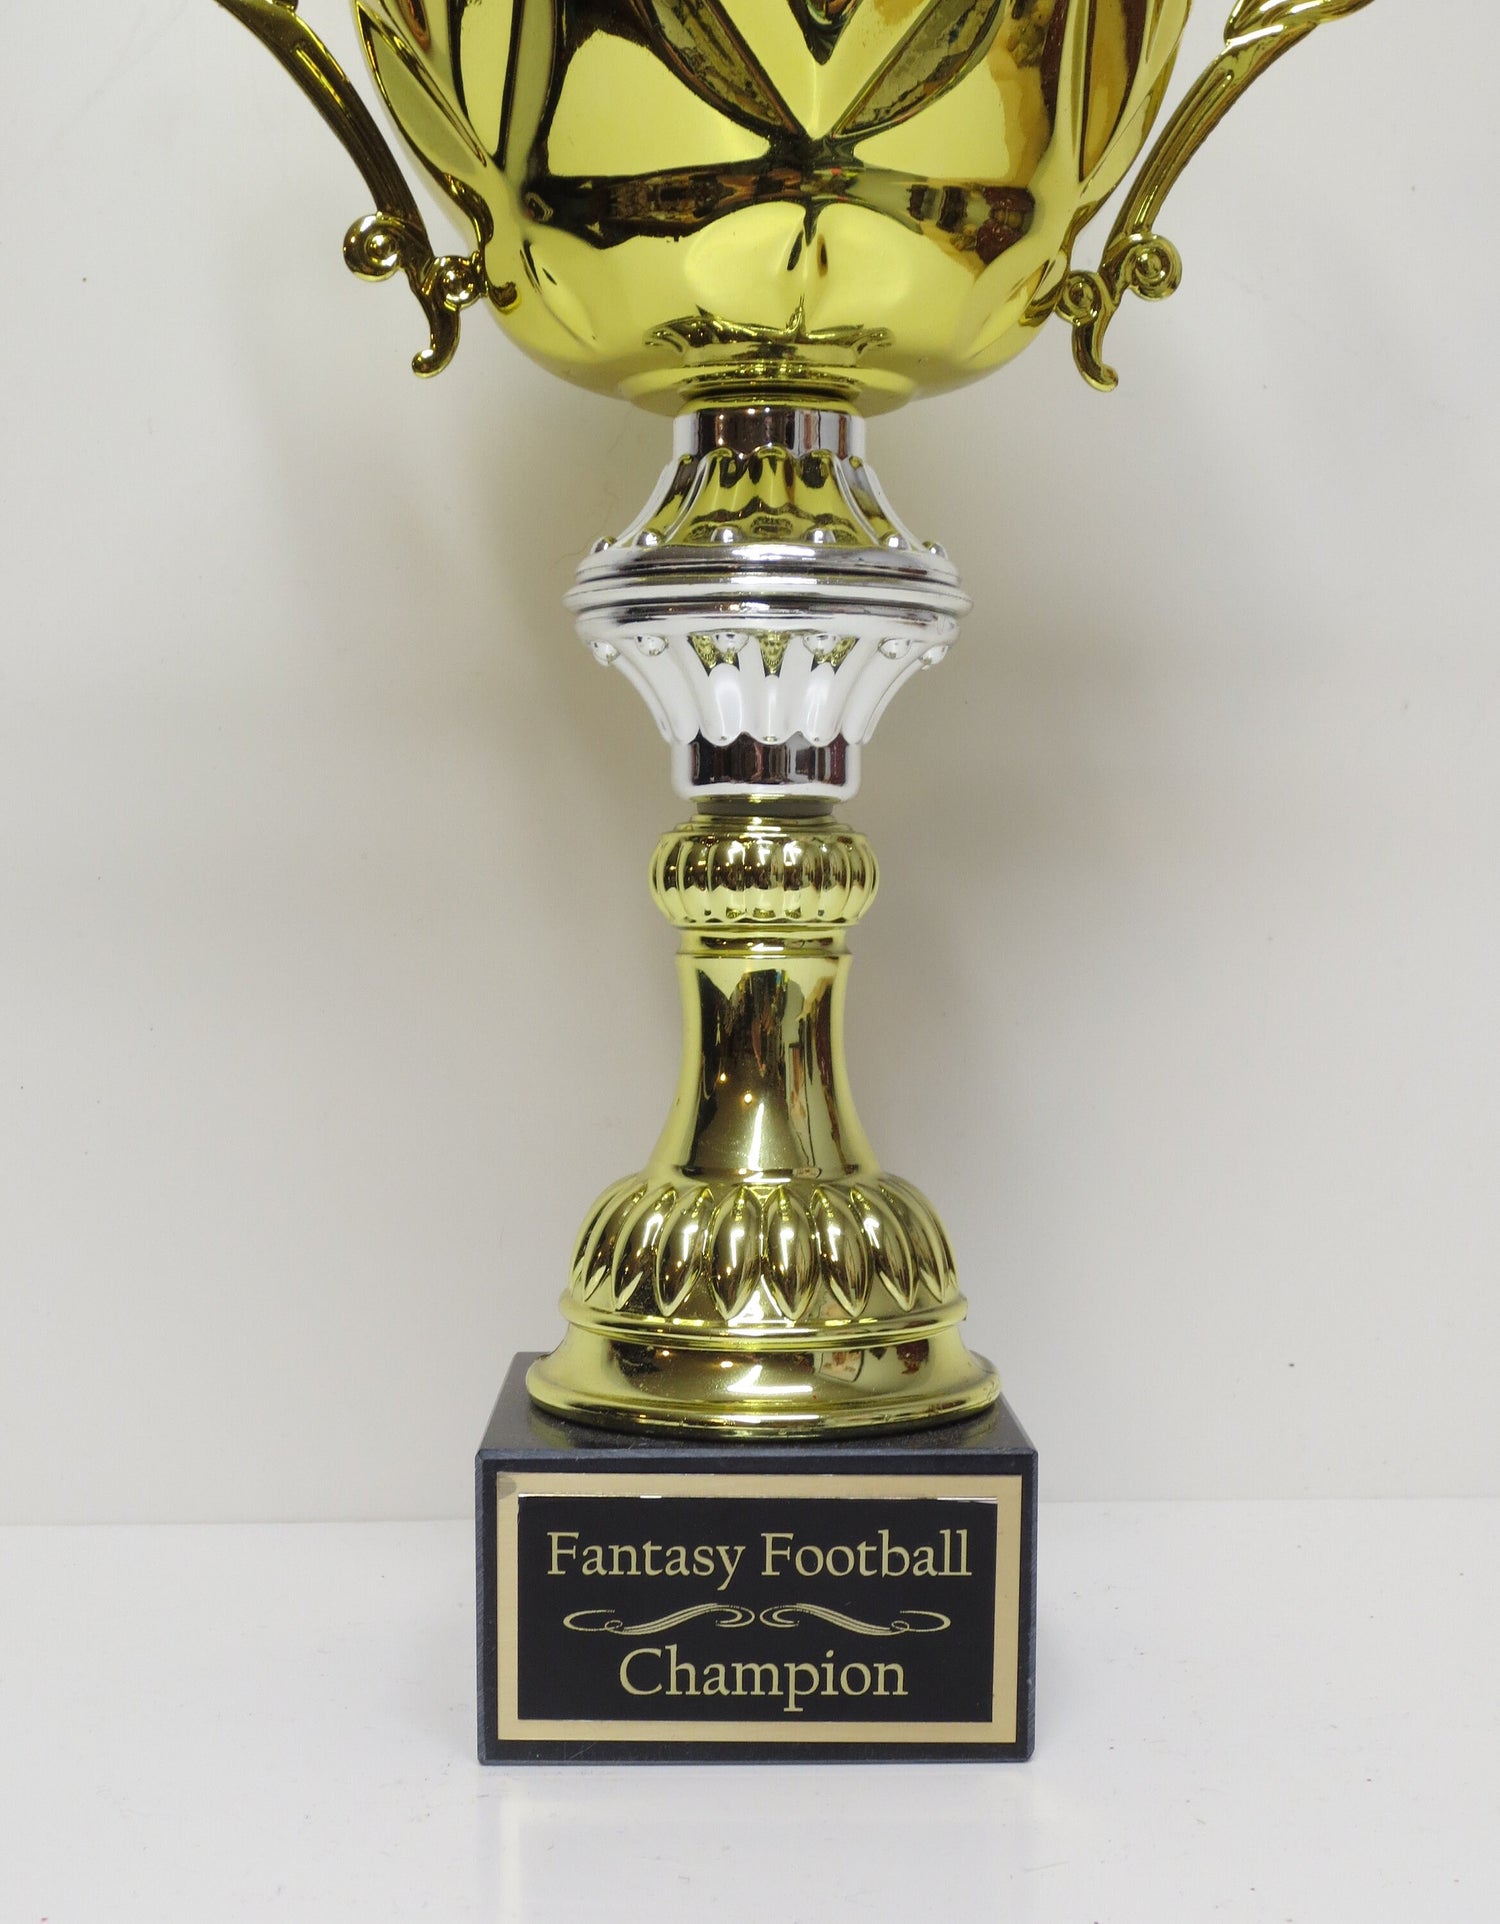 FFL Trophy Fantasy Football League Trophy 16" Metal Champion Championship Cup Champ Trophy Crown Football League Sports Award Winner